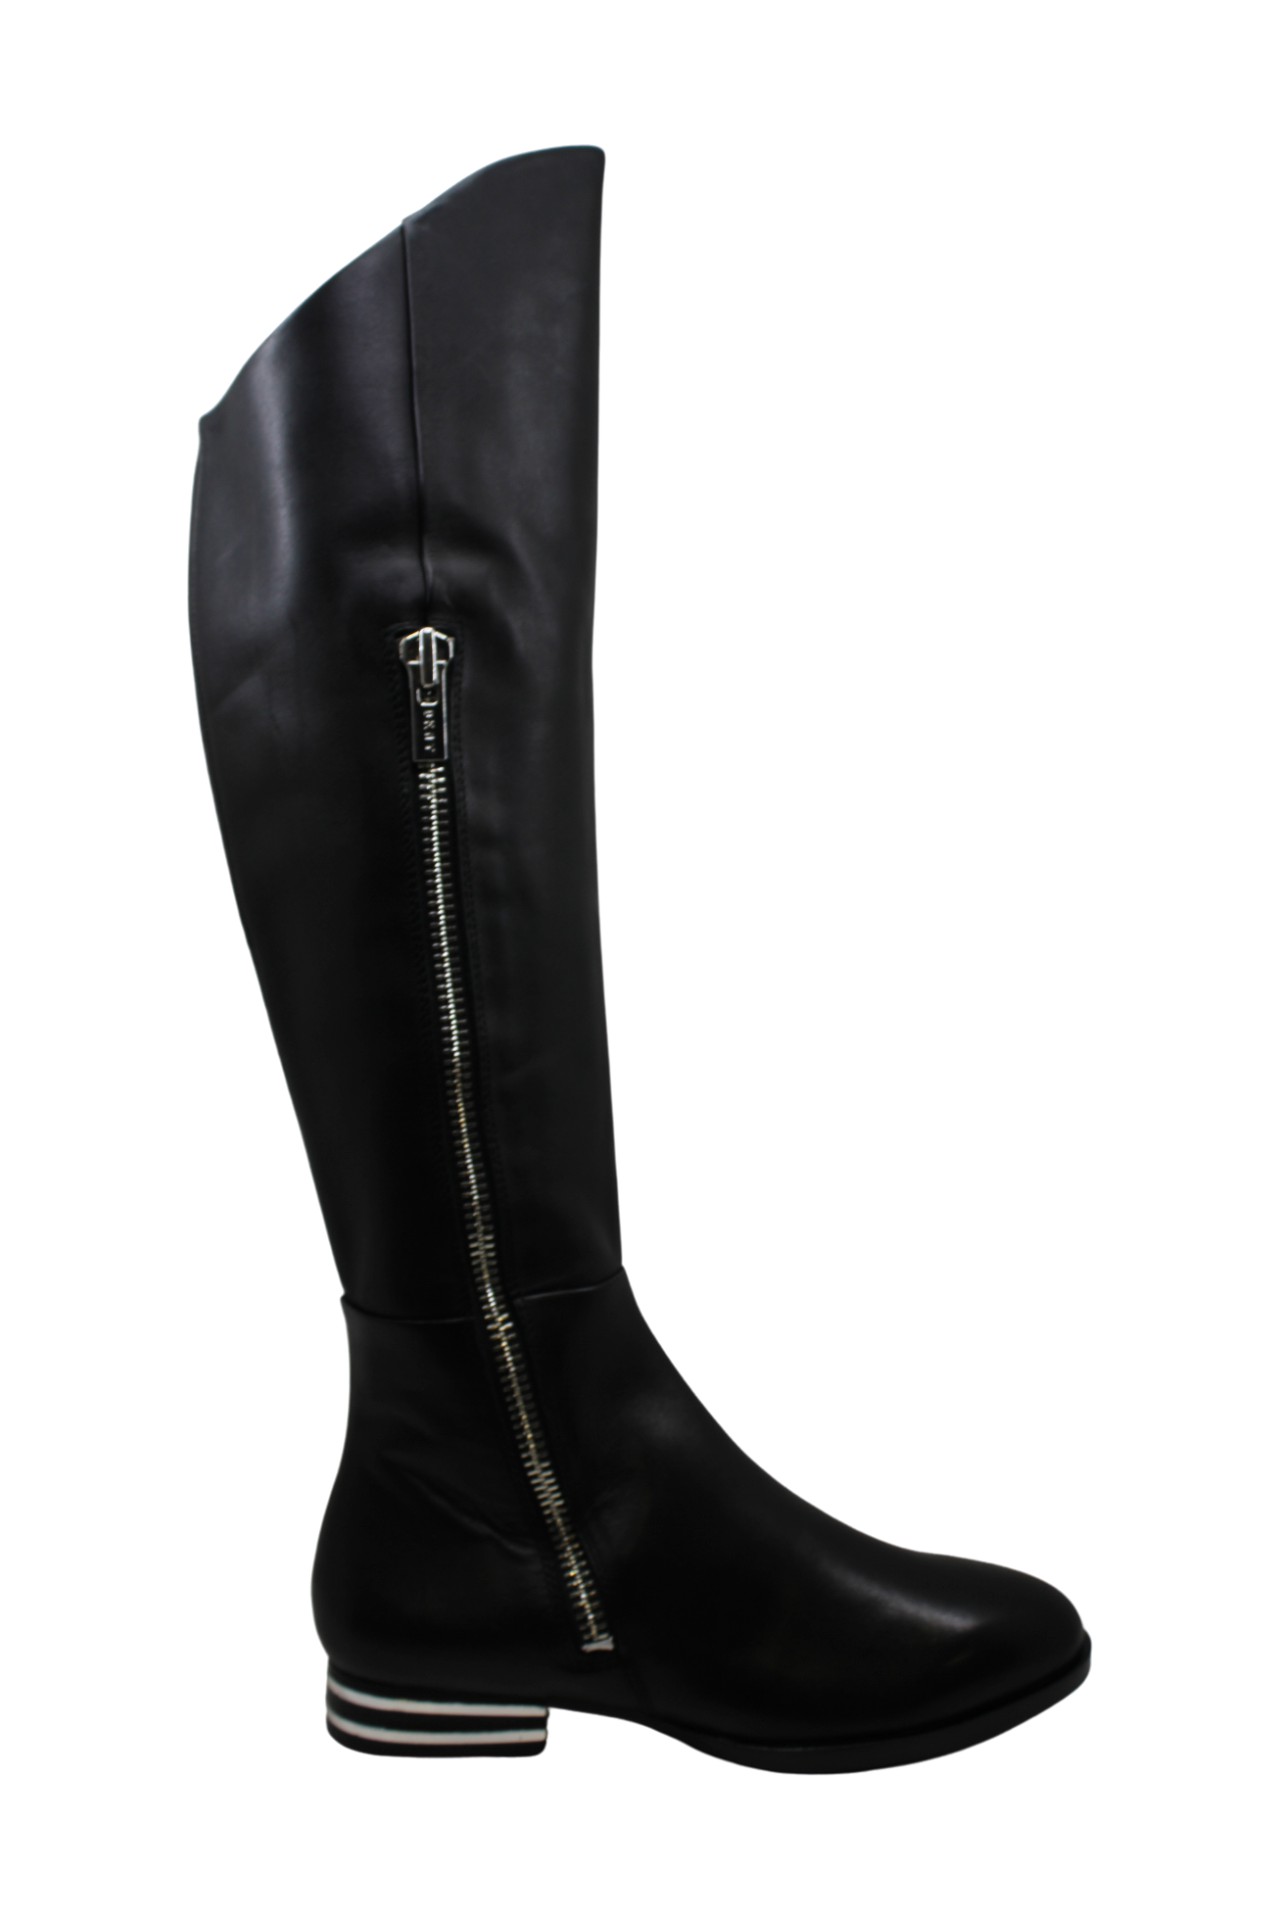 DKNY Womens LoLita Leather Almond Toe Knee High Riding Boots, Black ...